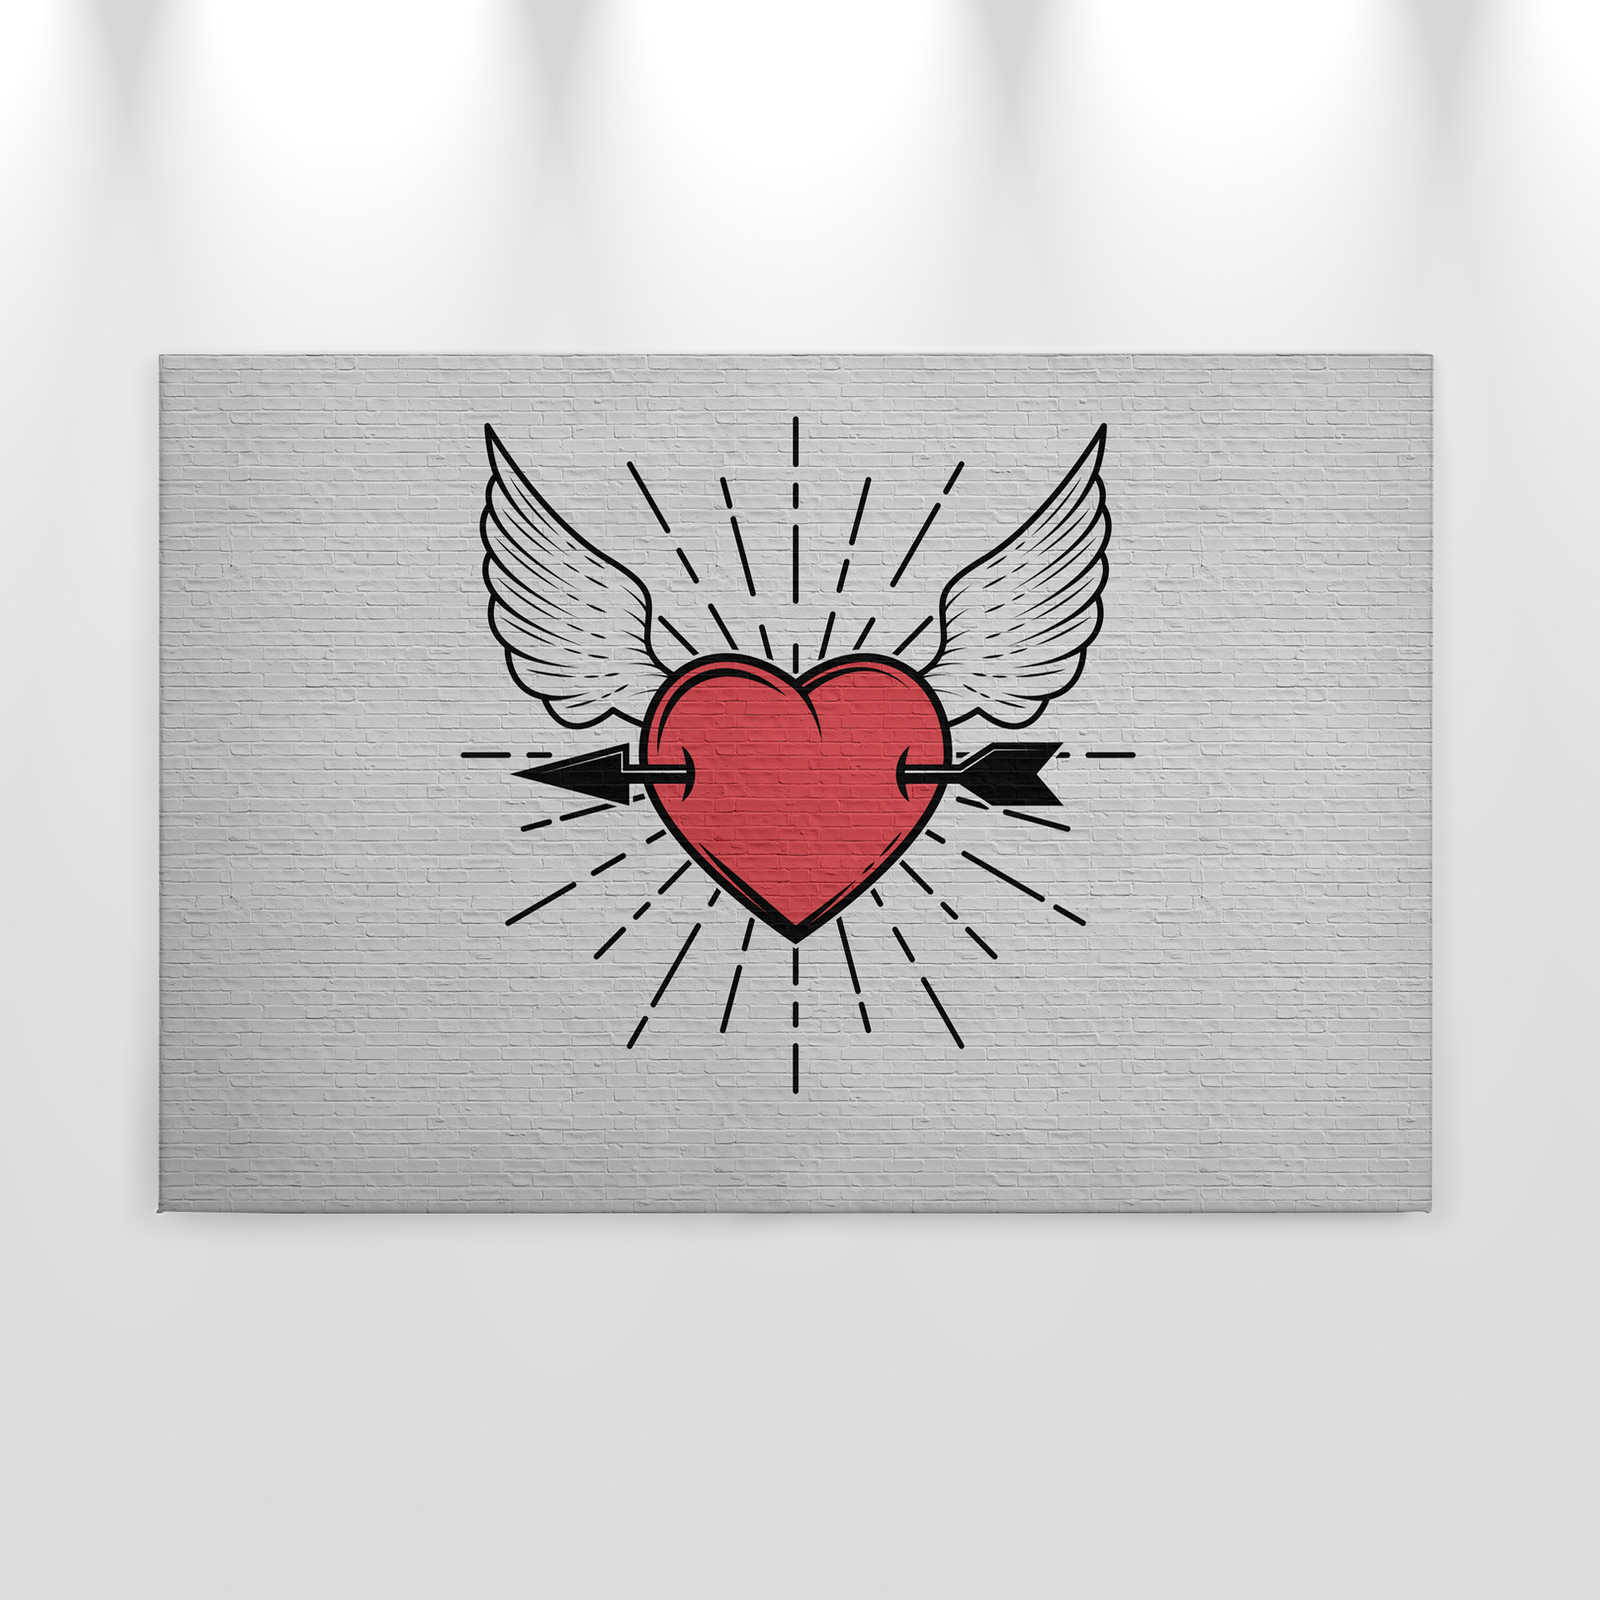             Tattoo you 1 - Rockabilly style canvas print, heart motif - 0.90 m x 0.60 m
        